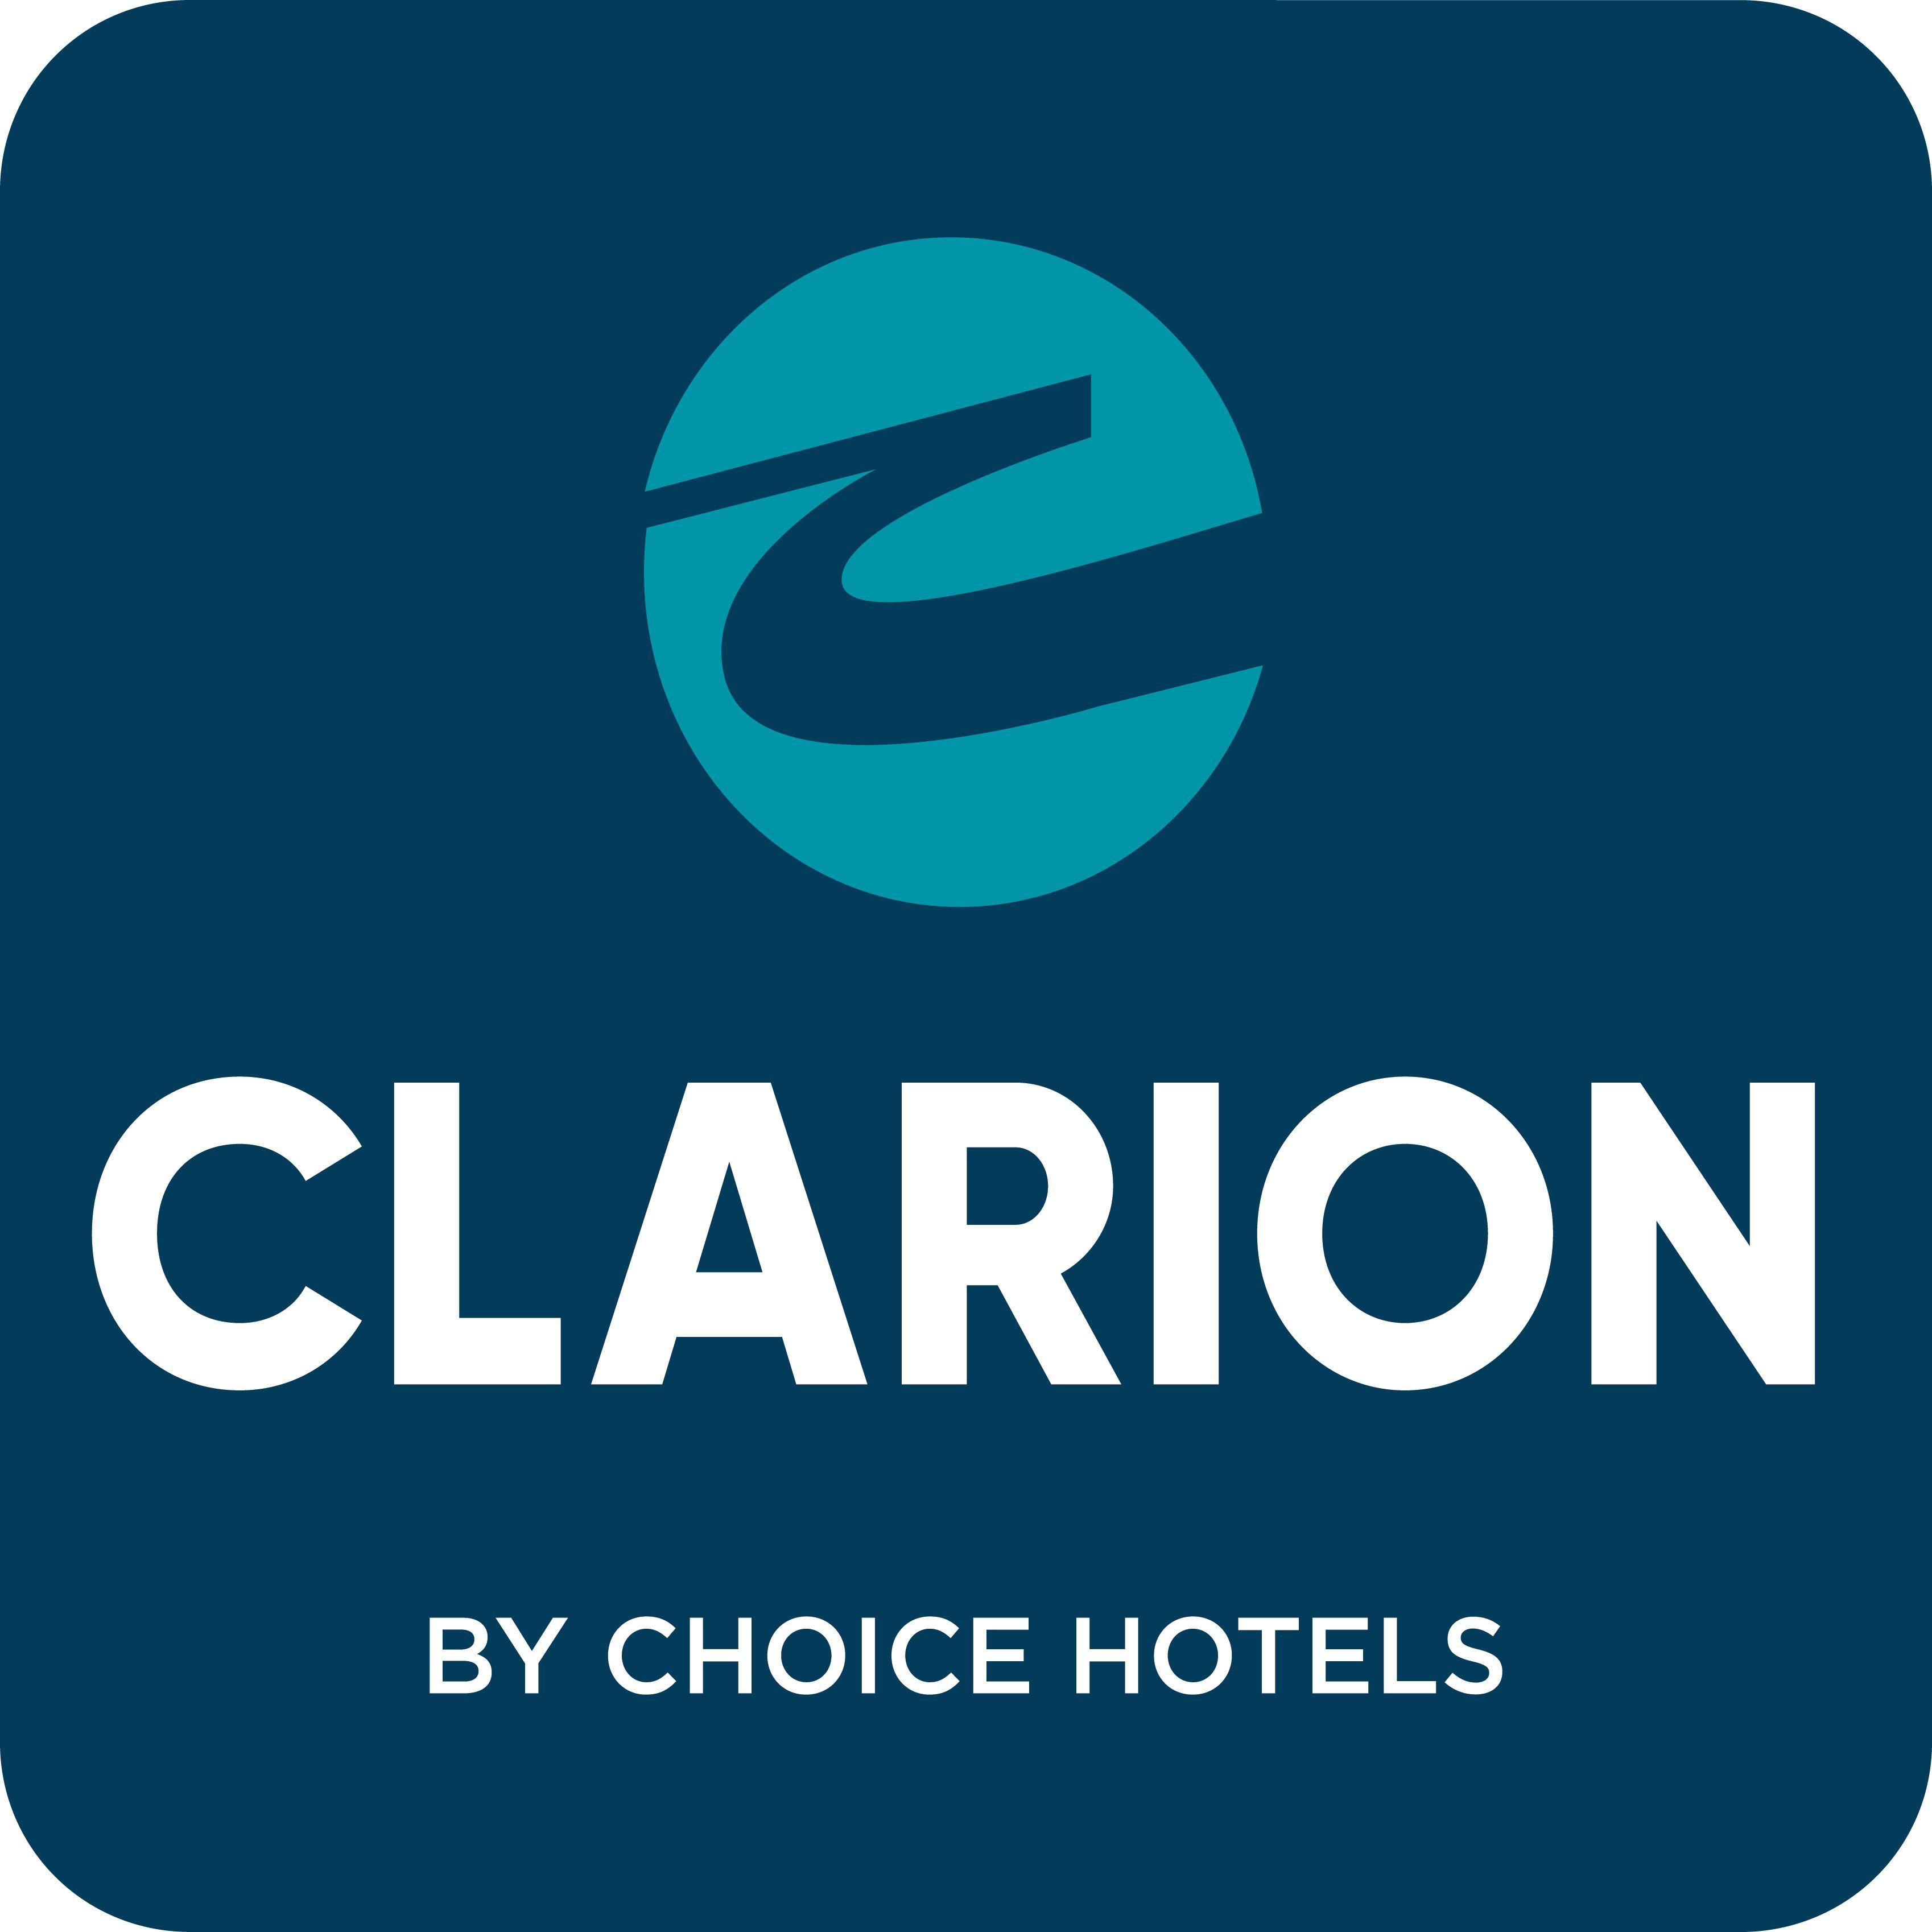 Clarion Logo - Choice Hotels International - Clarion Press Kit - Media Center